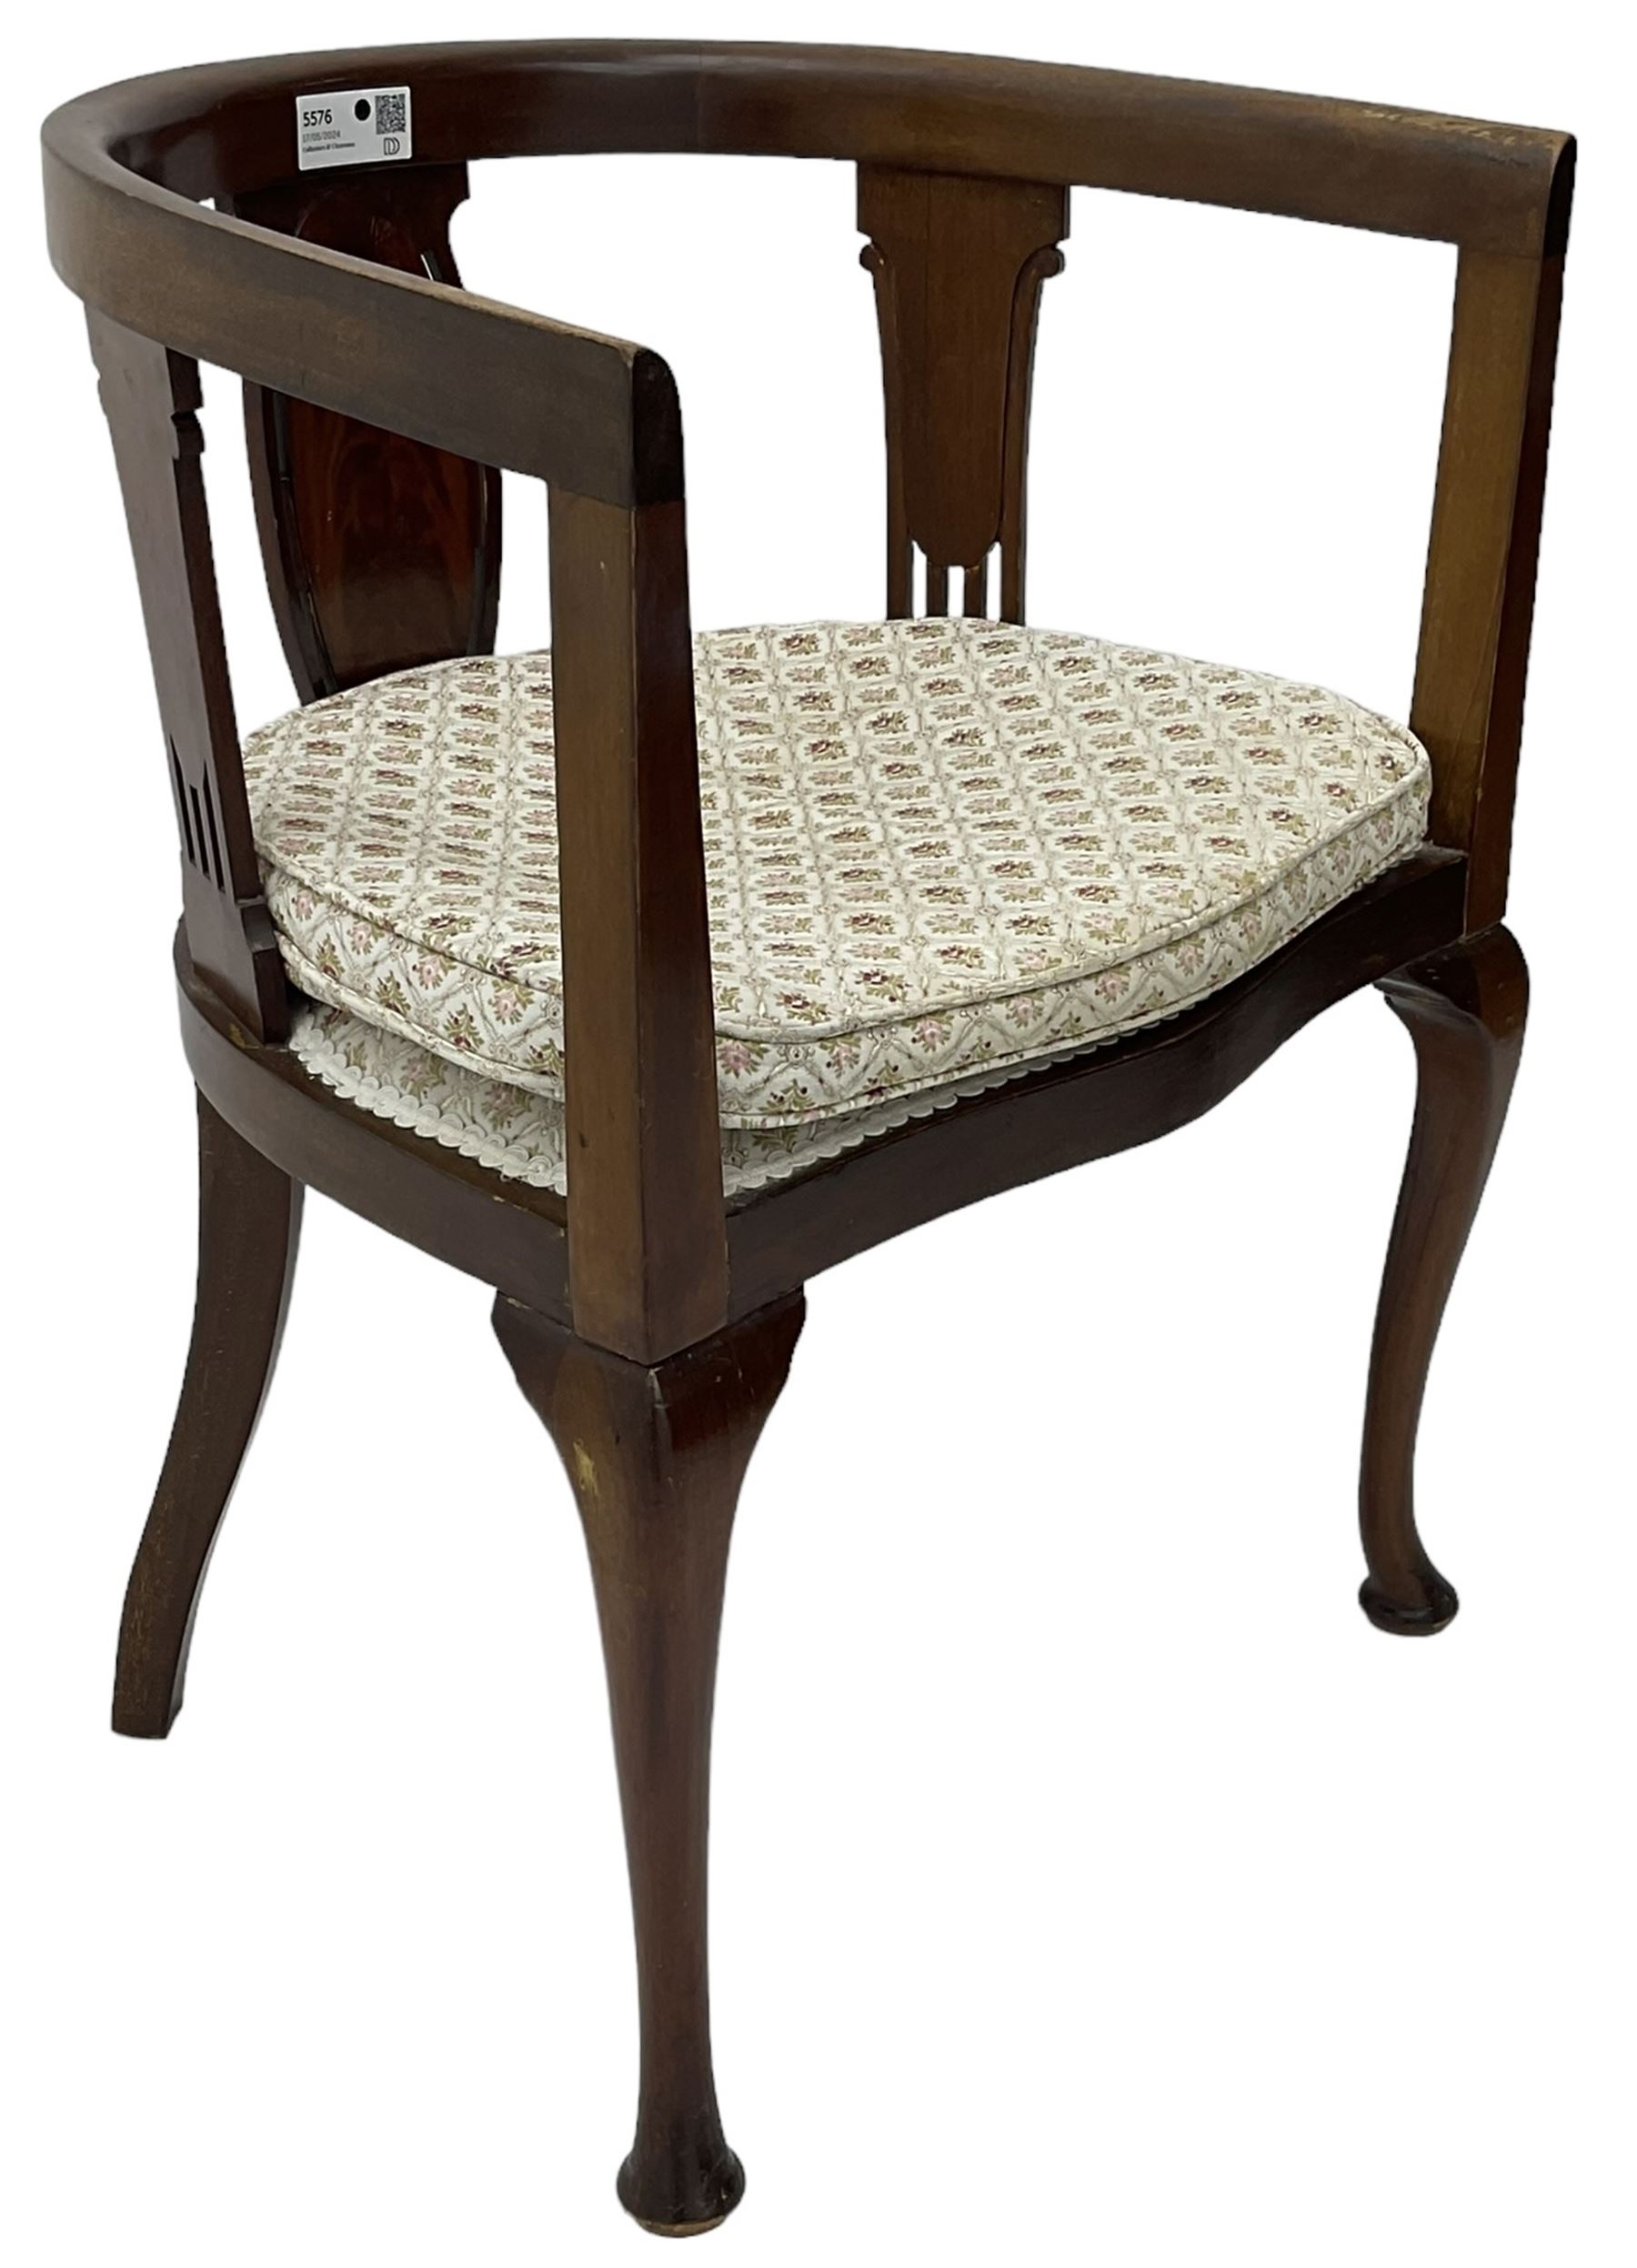 Early 20th century mahogany tub shaped chair - Image 3 of 5